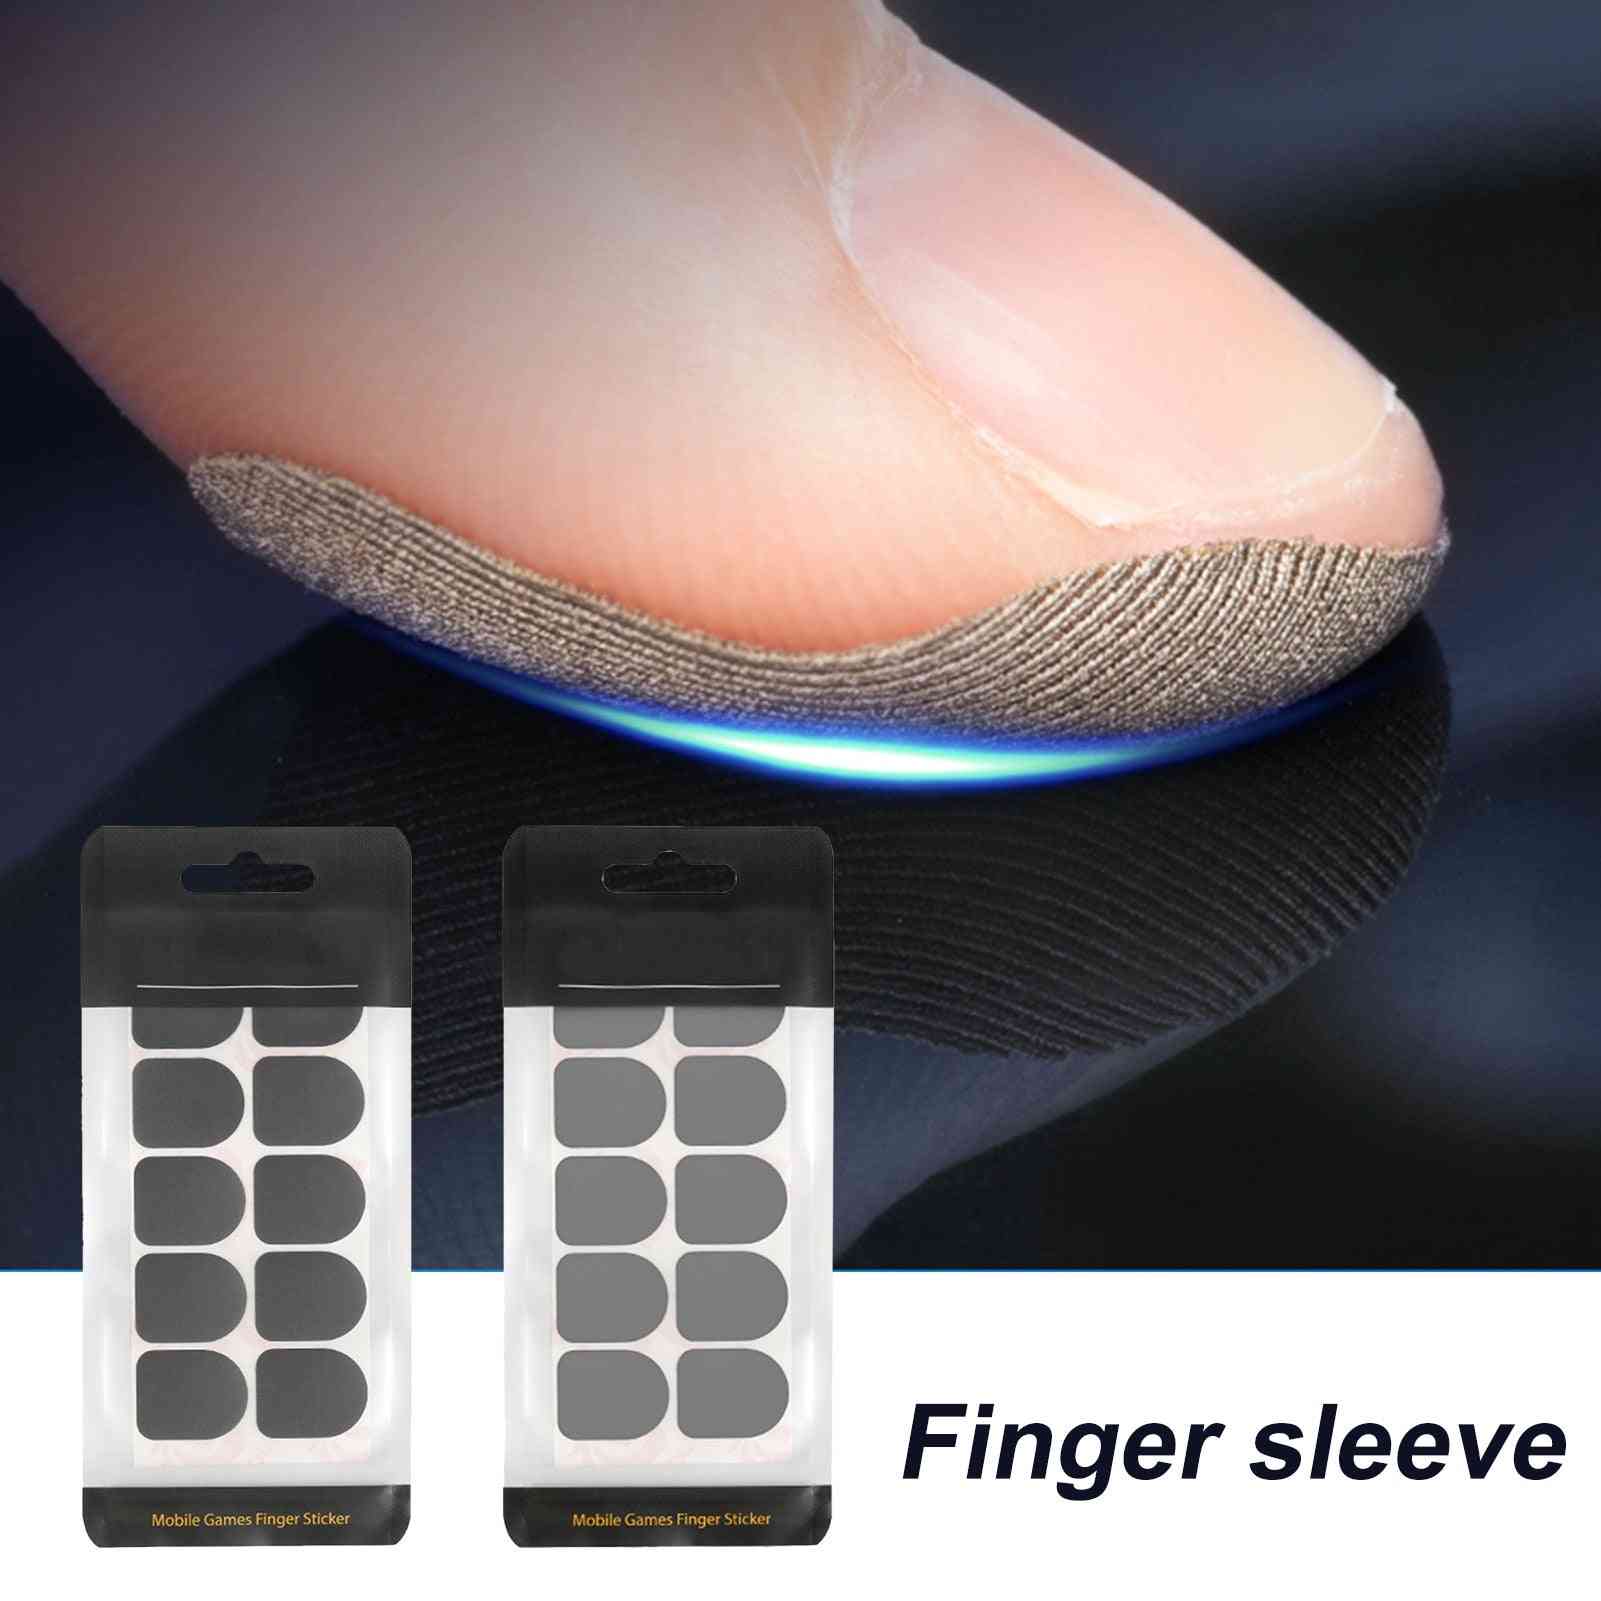 Anti-sweat Non-slip, Fiber Cot Touchscreen, Finger Sleeve, Game Accessories